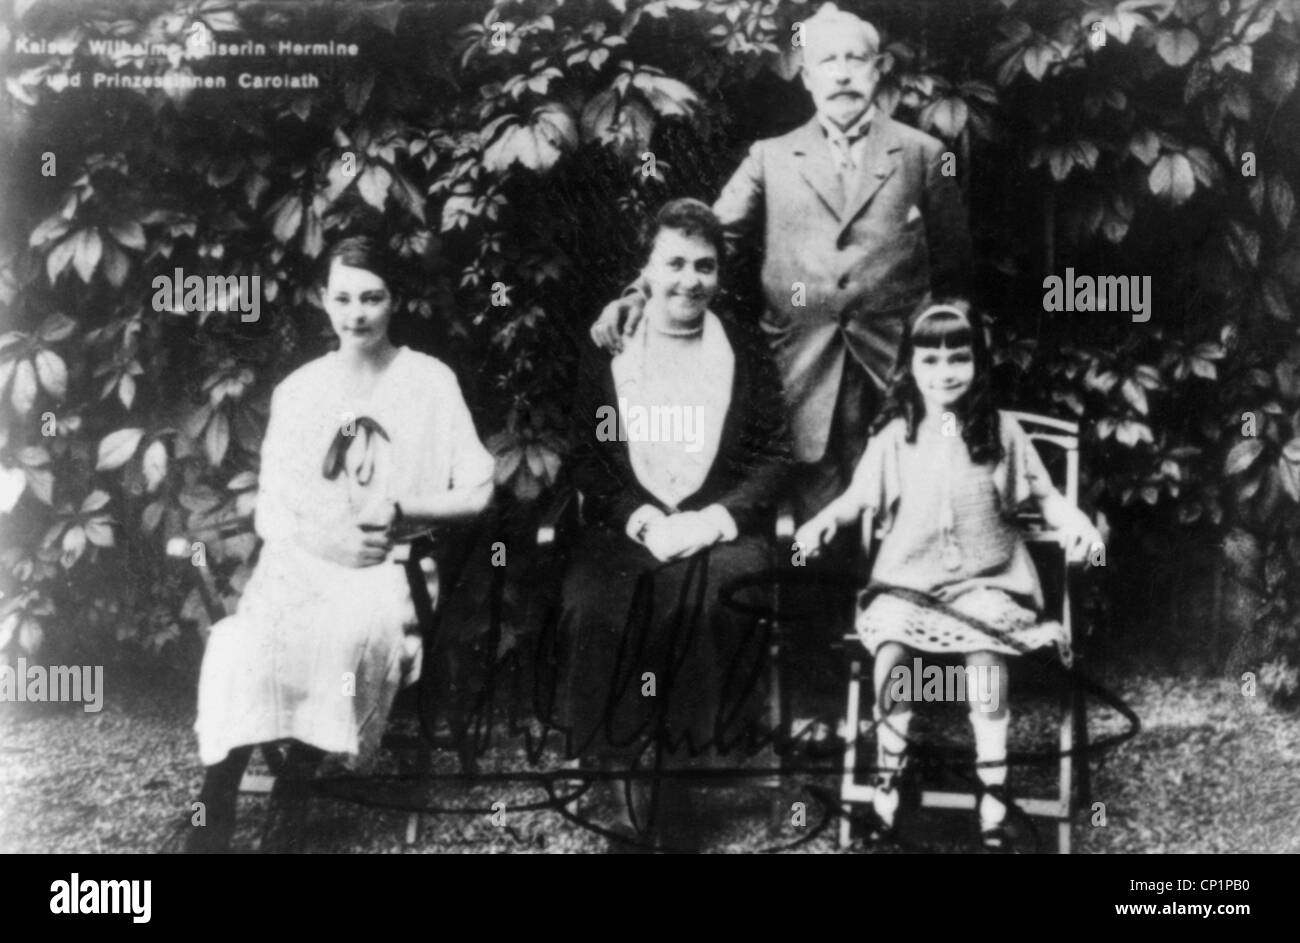 William II, 27.1.1859 - 4.6.1941, German emperor 15.6.1888 - 9.11.1918, exile, with wife Hermine and her daughters Caroline and Henriette von Schoenaich-Carolath, Huis Doorn, Netherlands, um 1925, Stock Photo